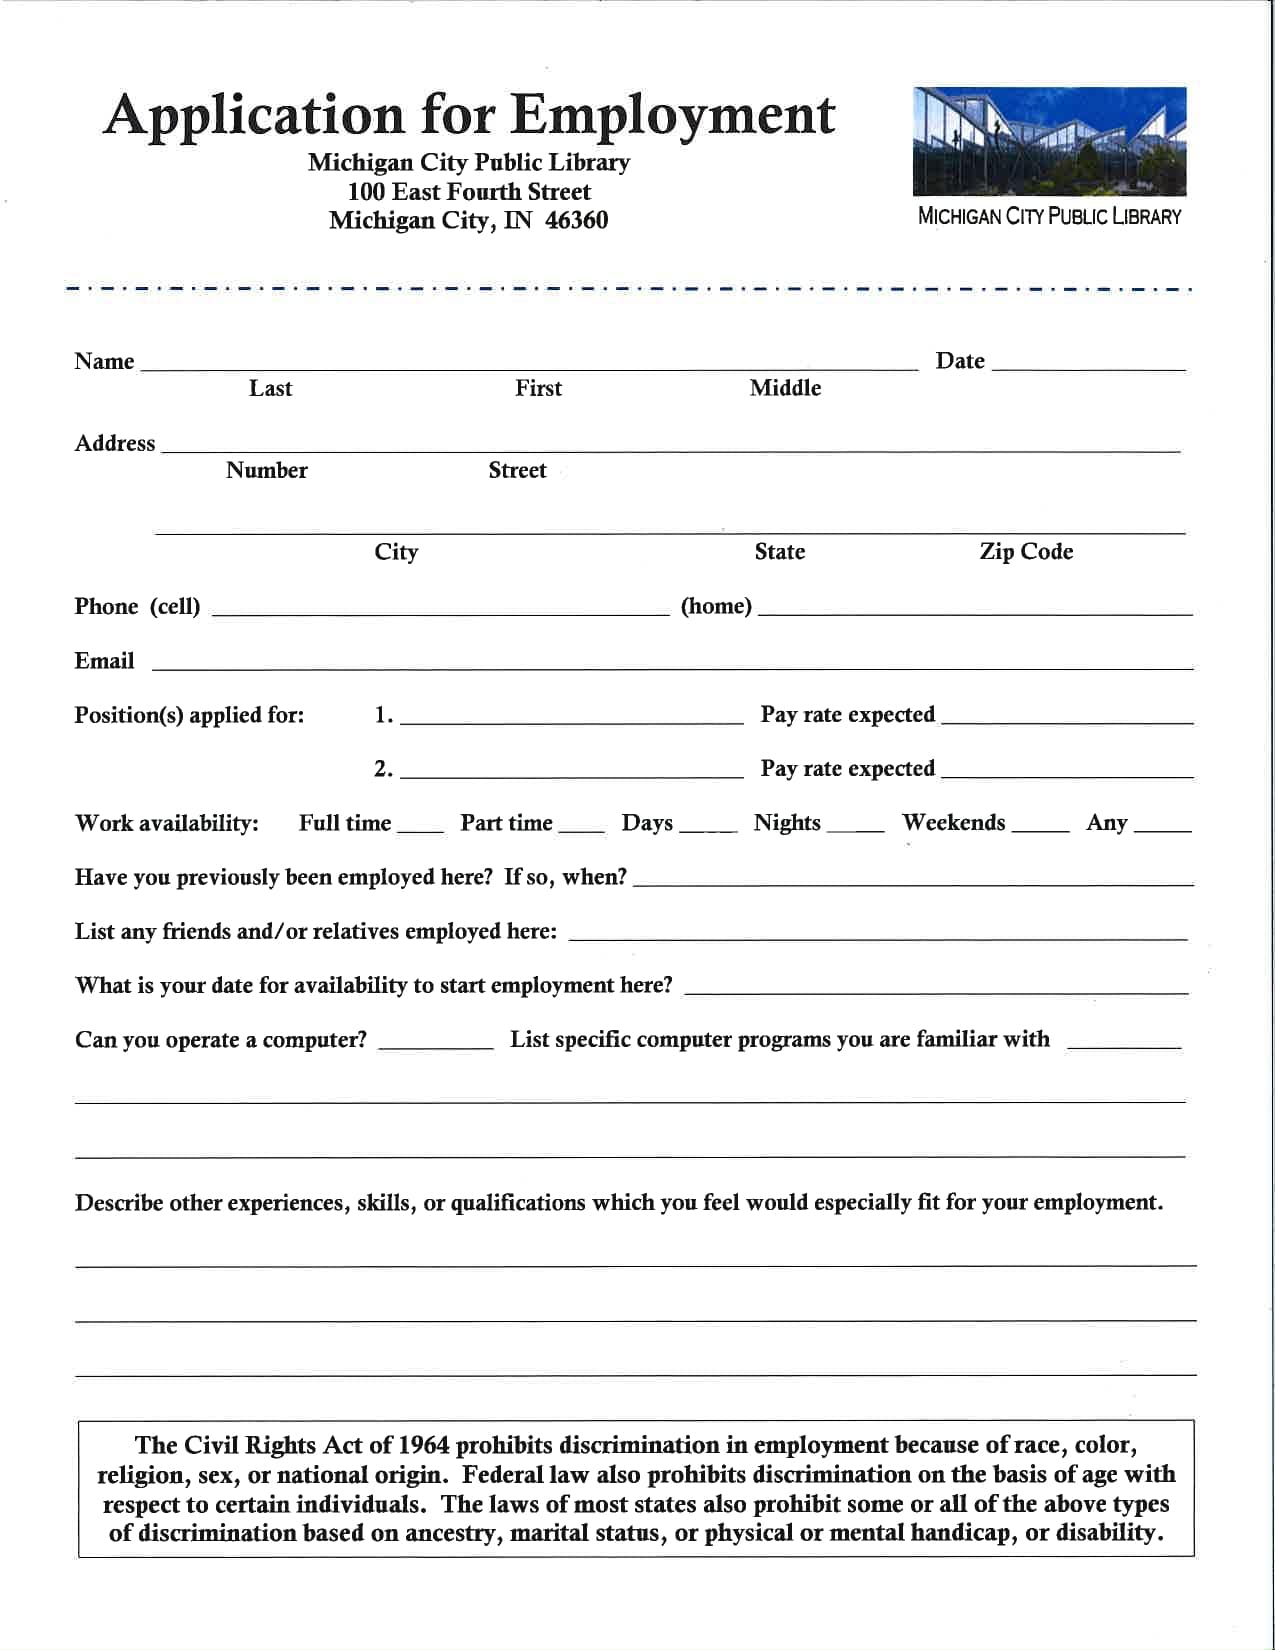 Michigan City Public Library job application, pg. 1